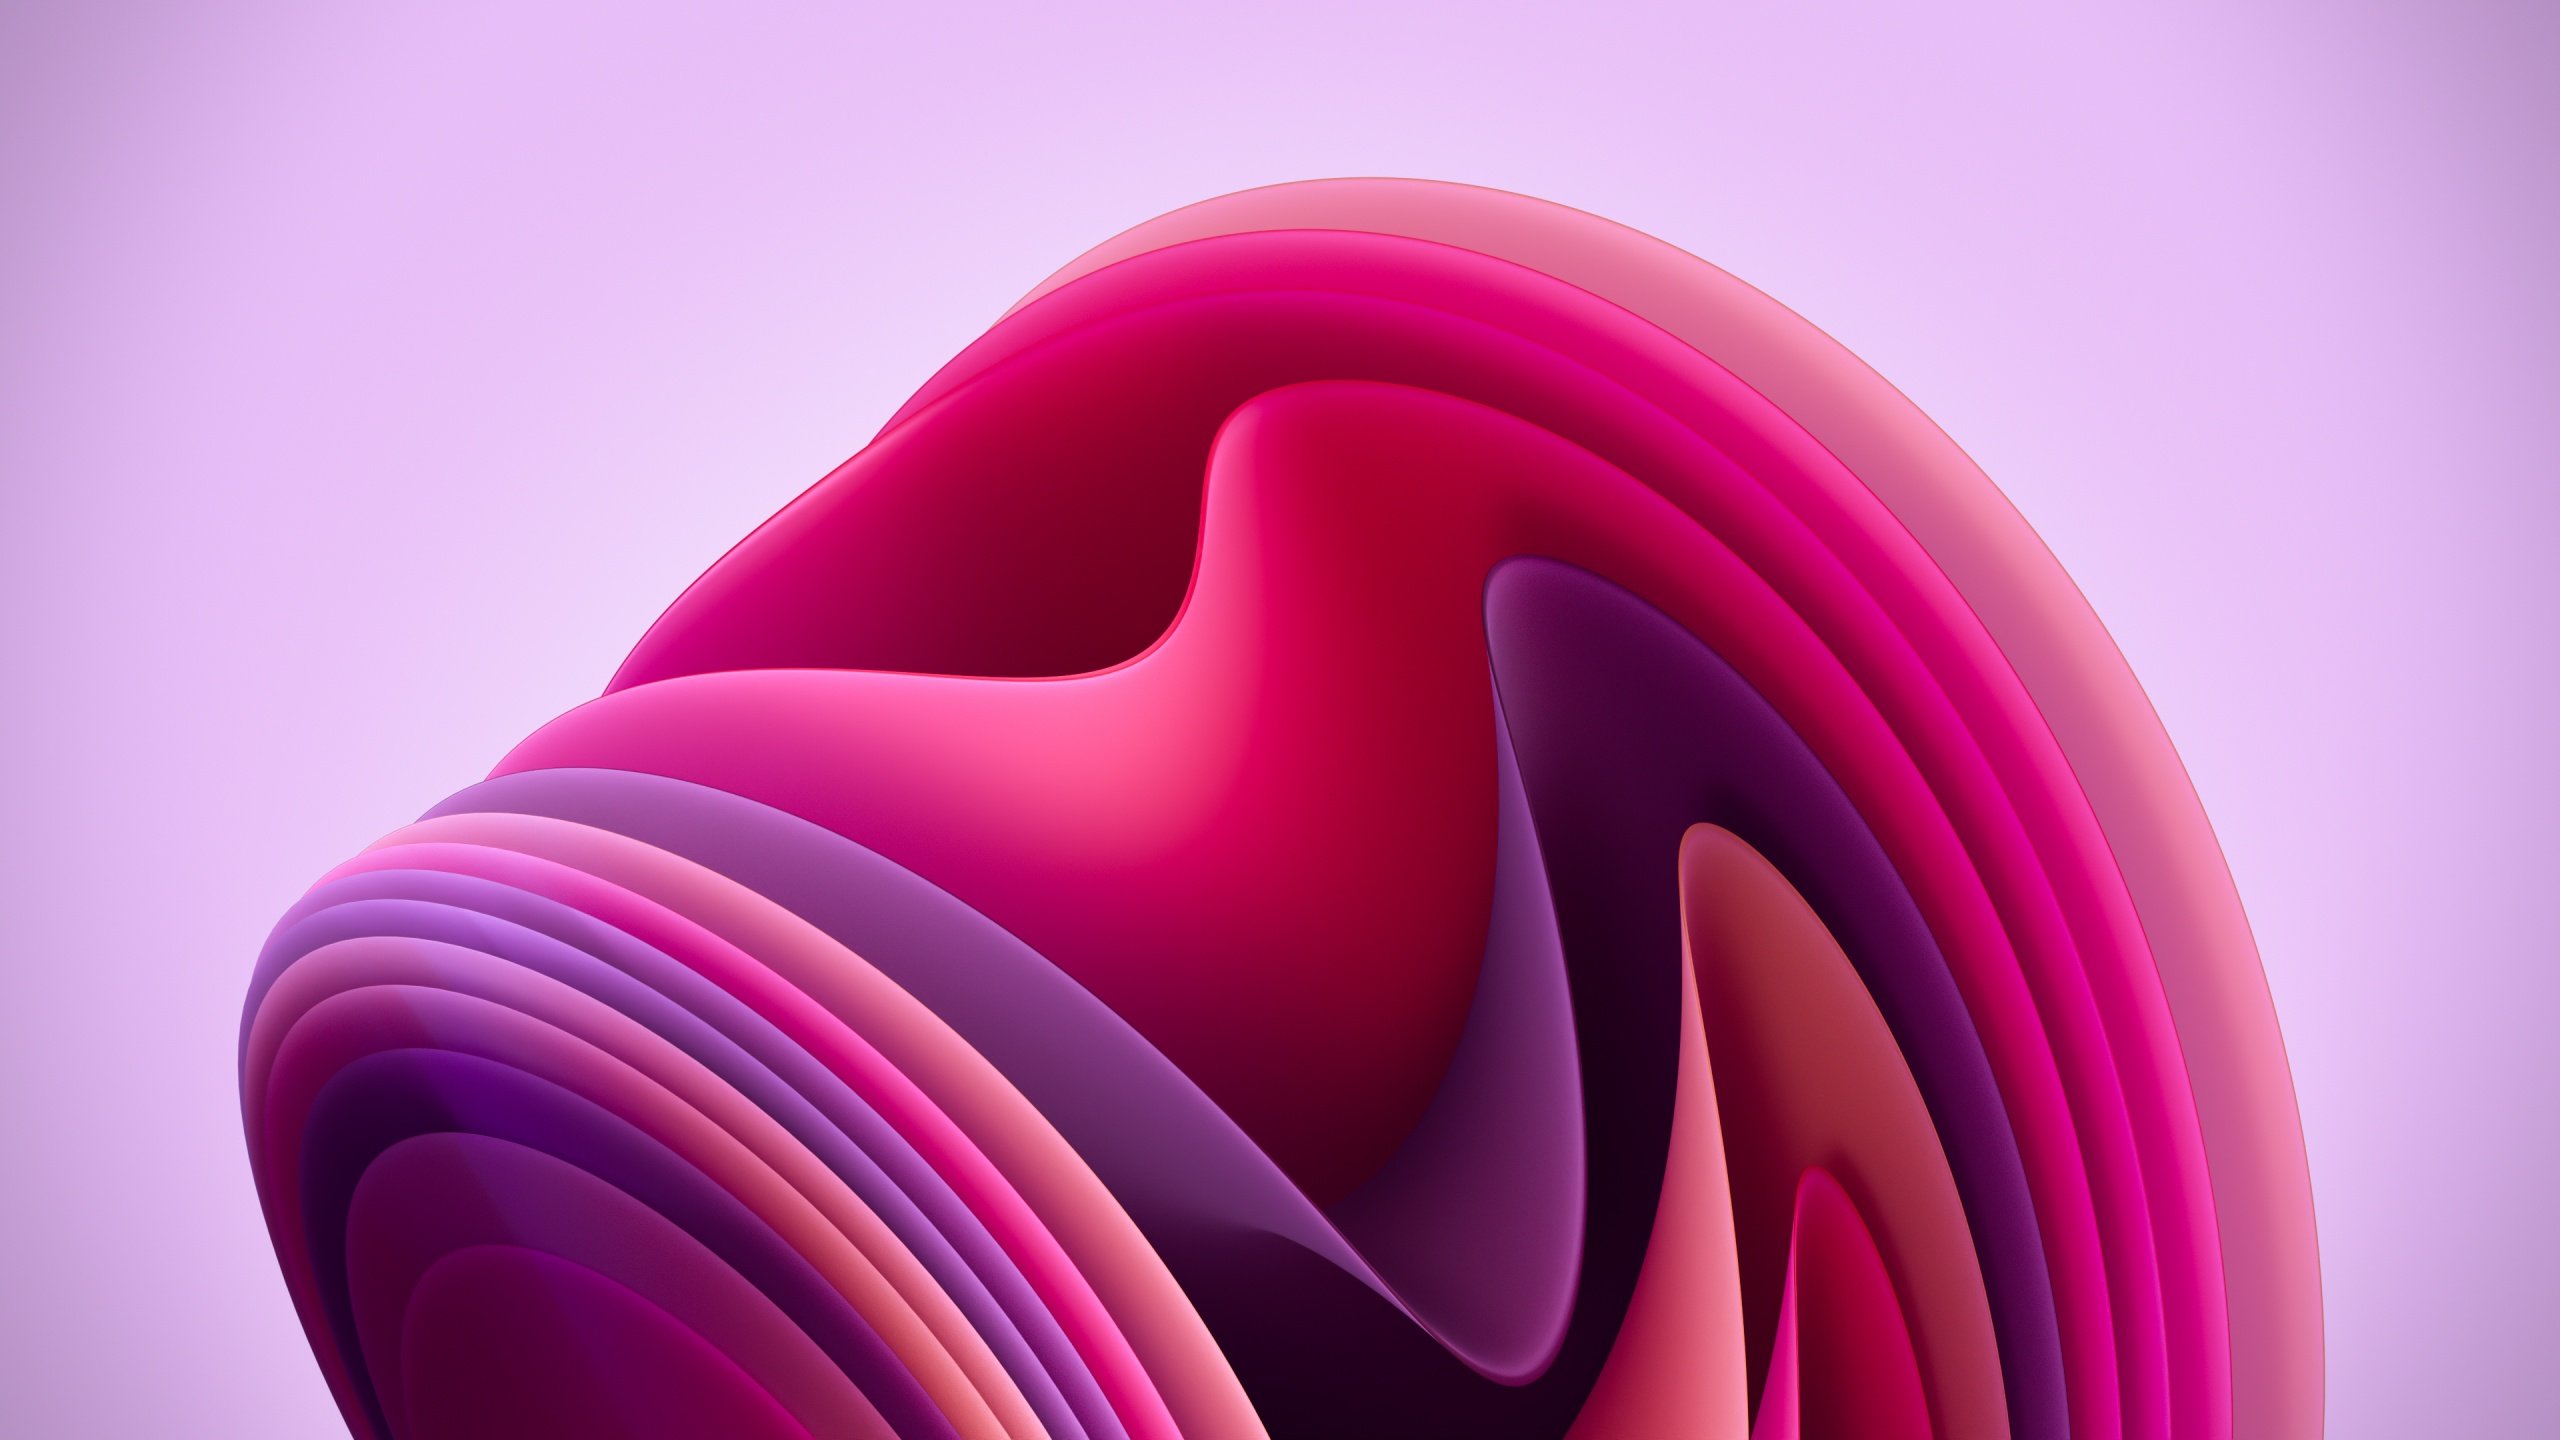 Windows 11 Wallpaper 4K, Flow, Light, Pink background, Abstract